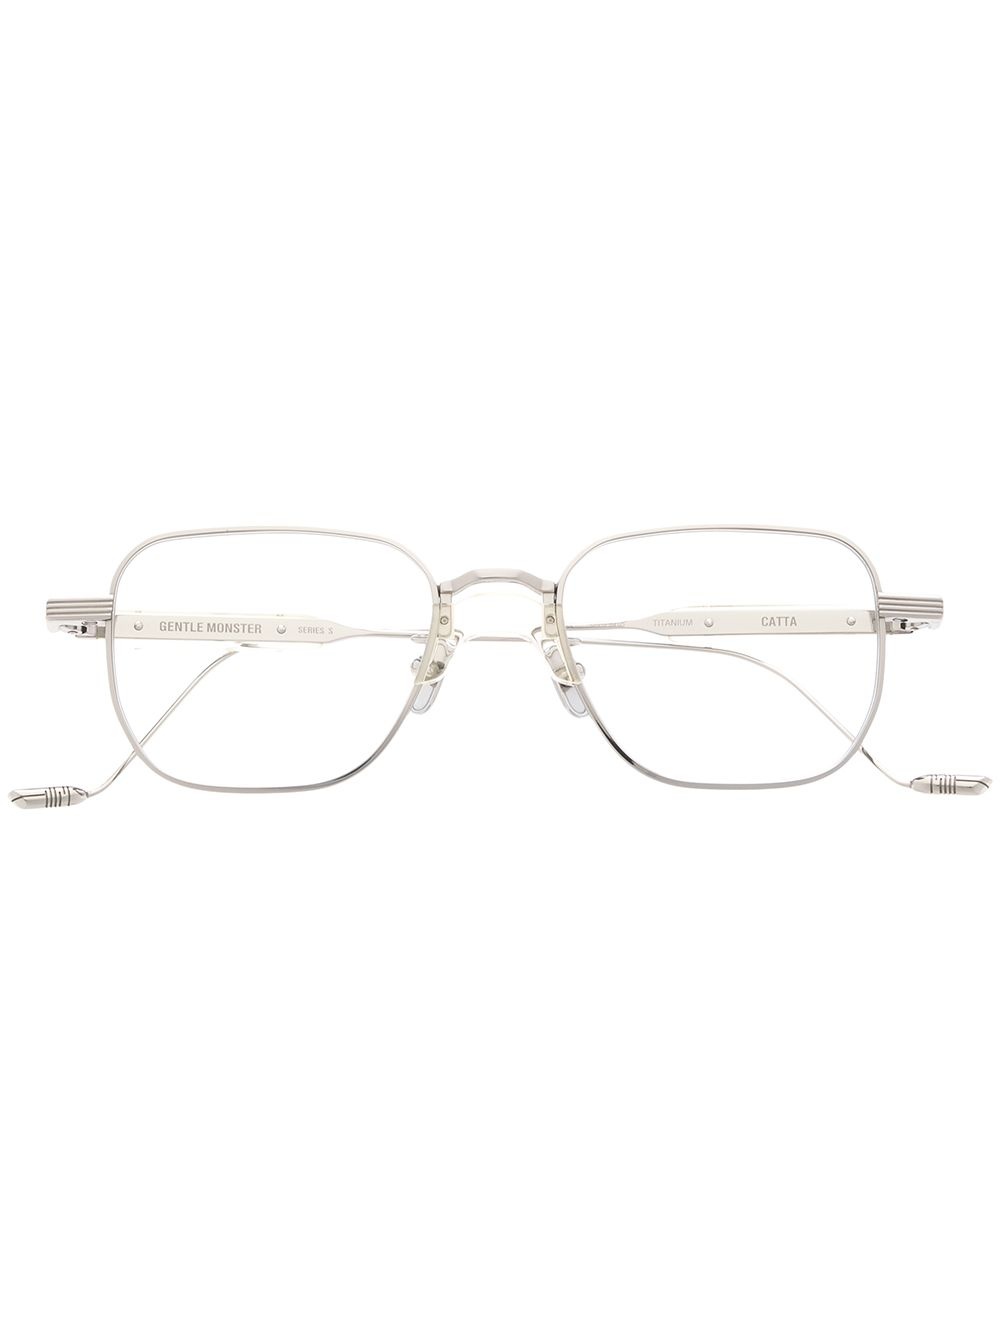 Catta C2 square-frame glasses